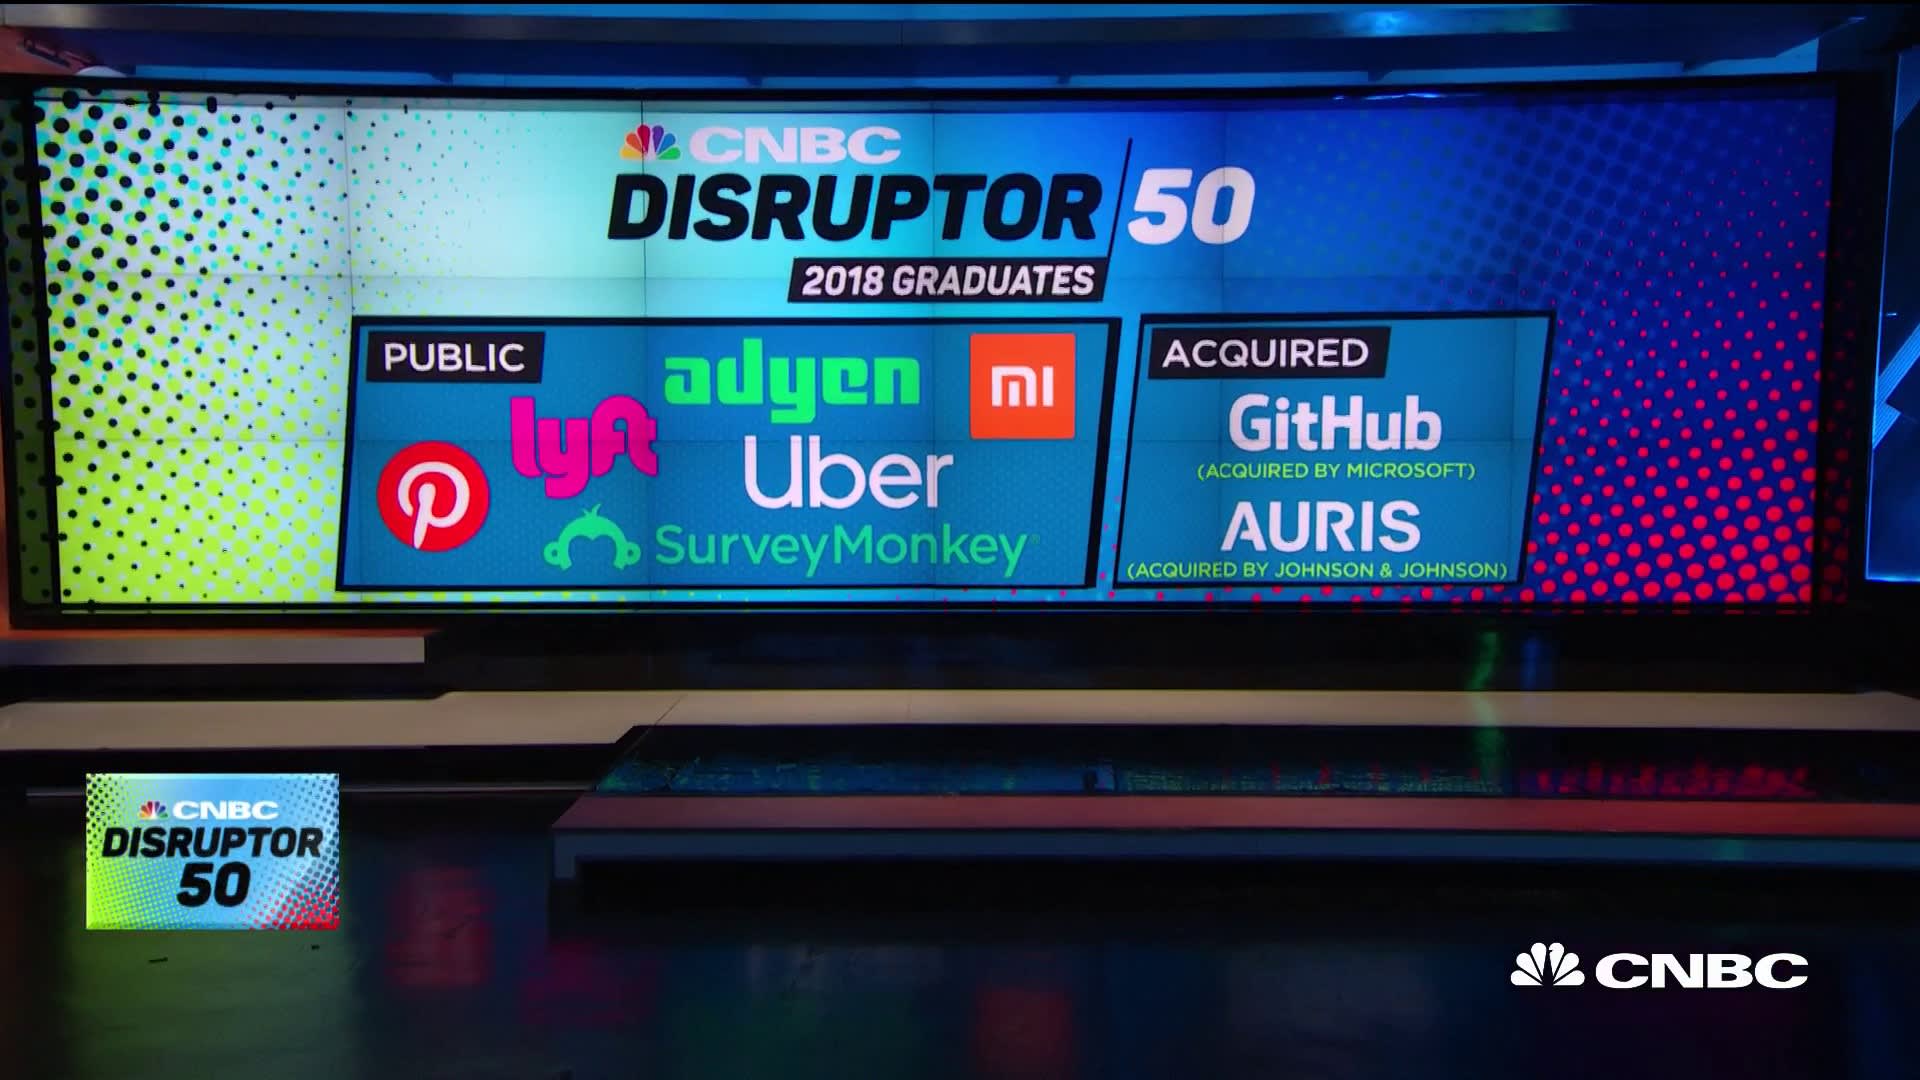 Mendicidad barato Panda Here's a breakdown of the companies on CNBC's Disruptor 50 list